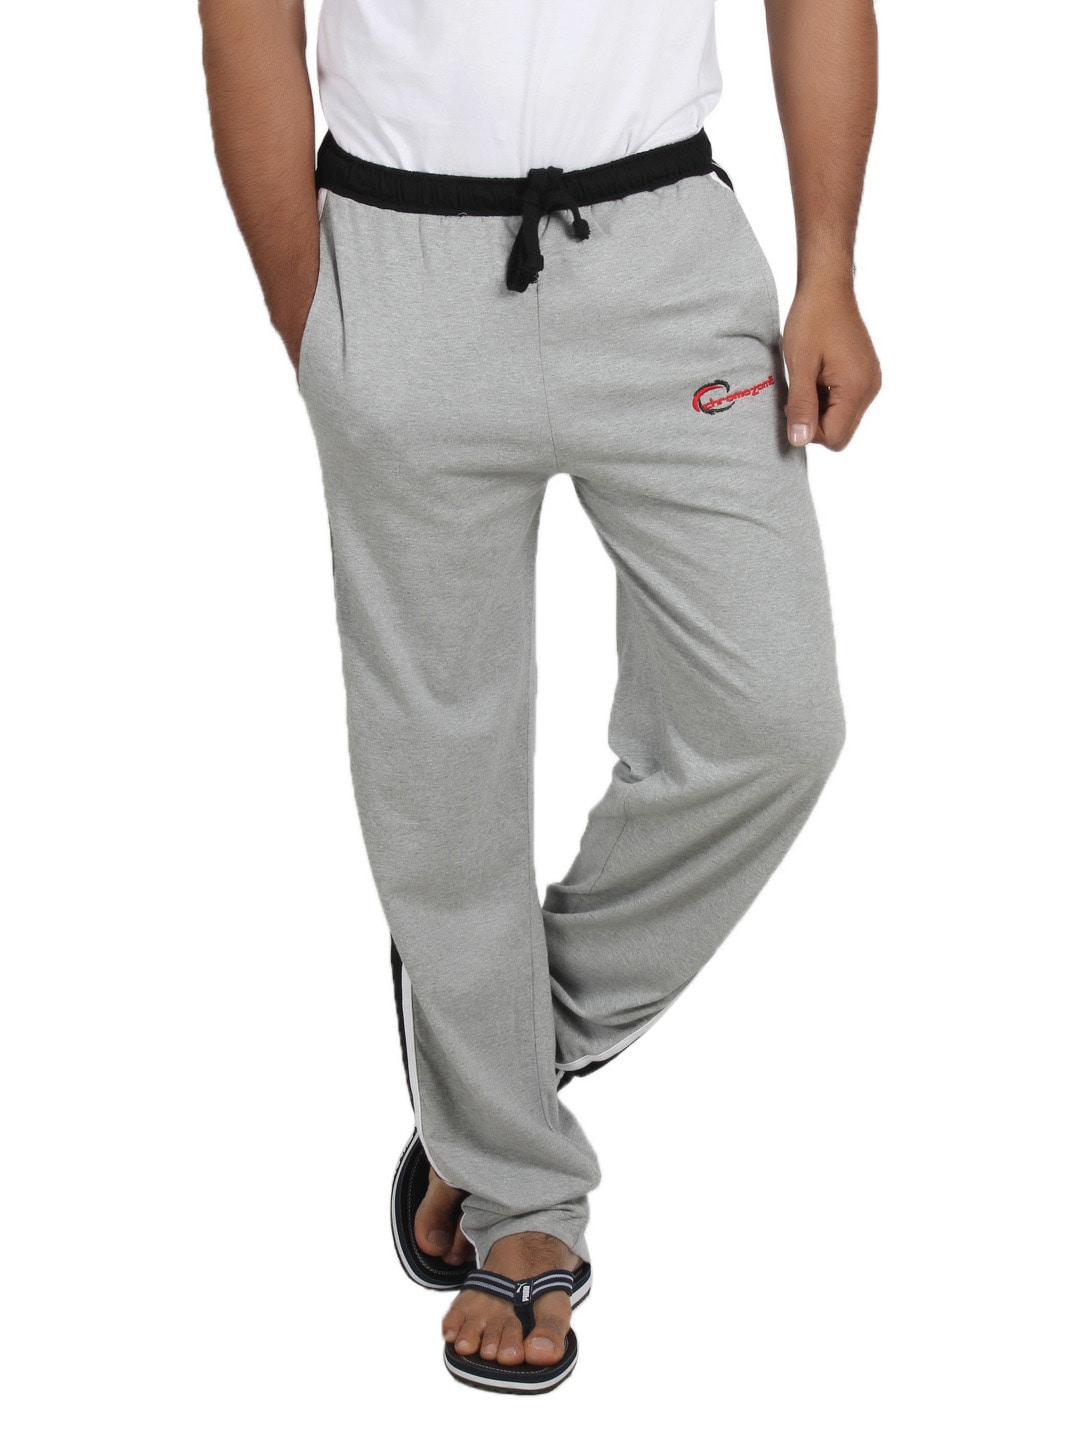 Chromozome Men Grey Melange Fashion Lounge Pants S-5145